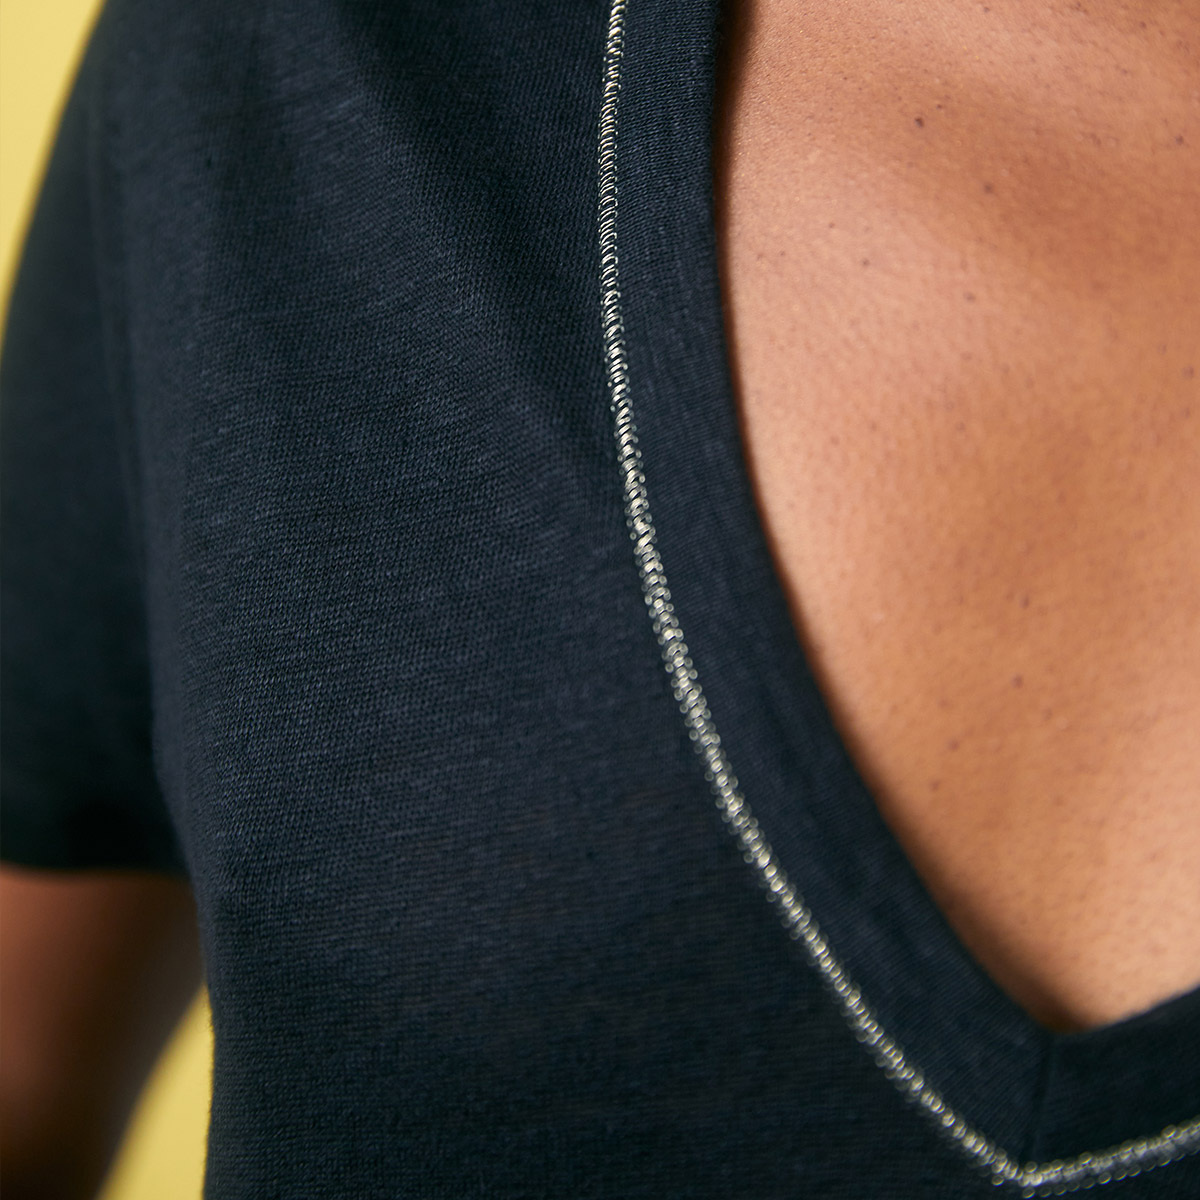 T-shirt Salin, Black - V-neck T-shirt with gold lurex finish - 100% linen - image 2